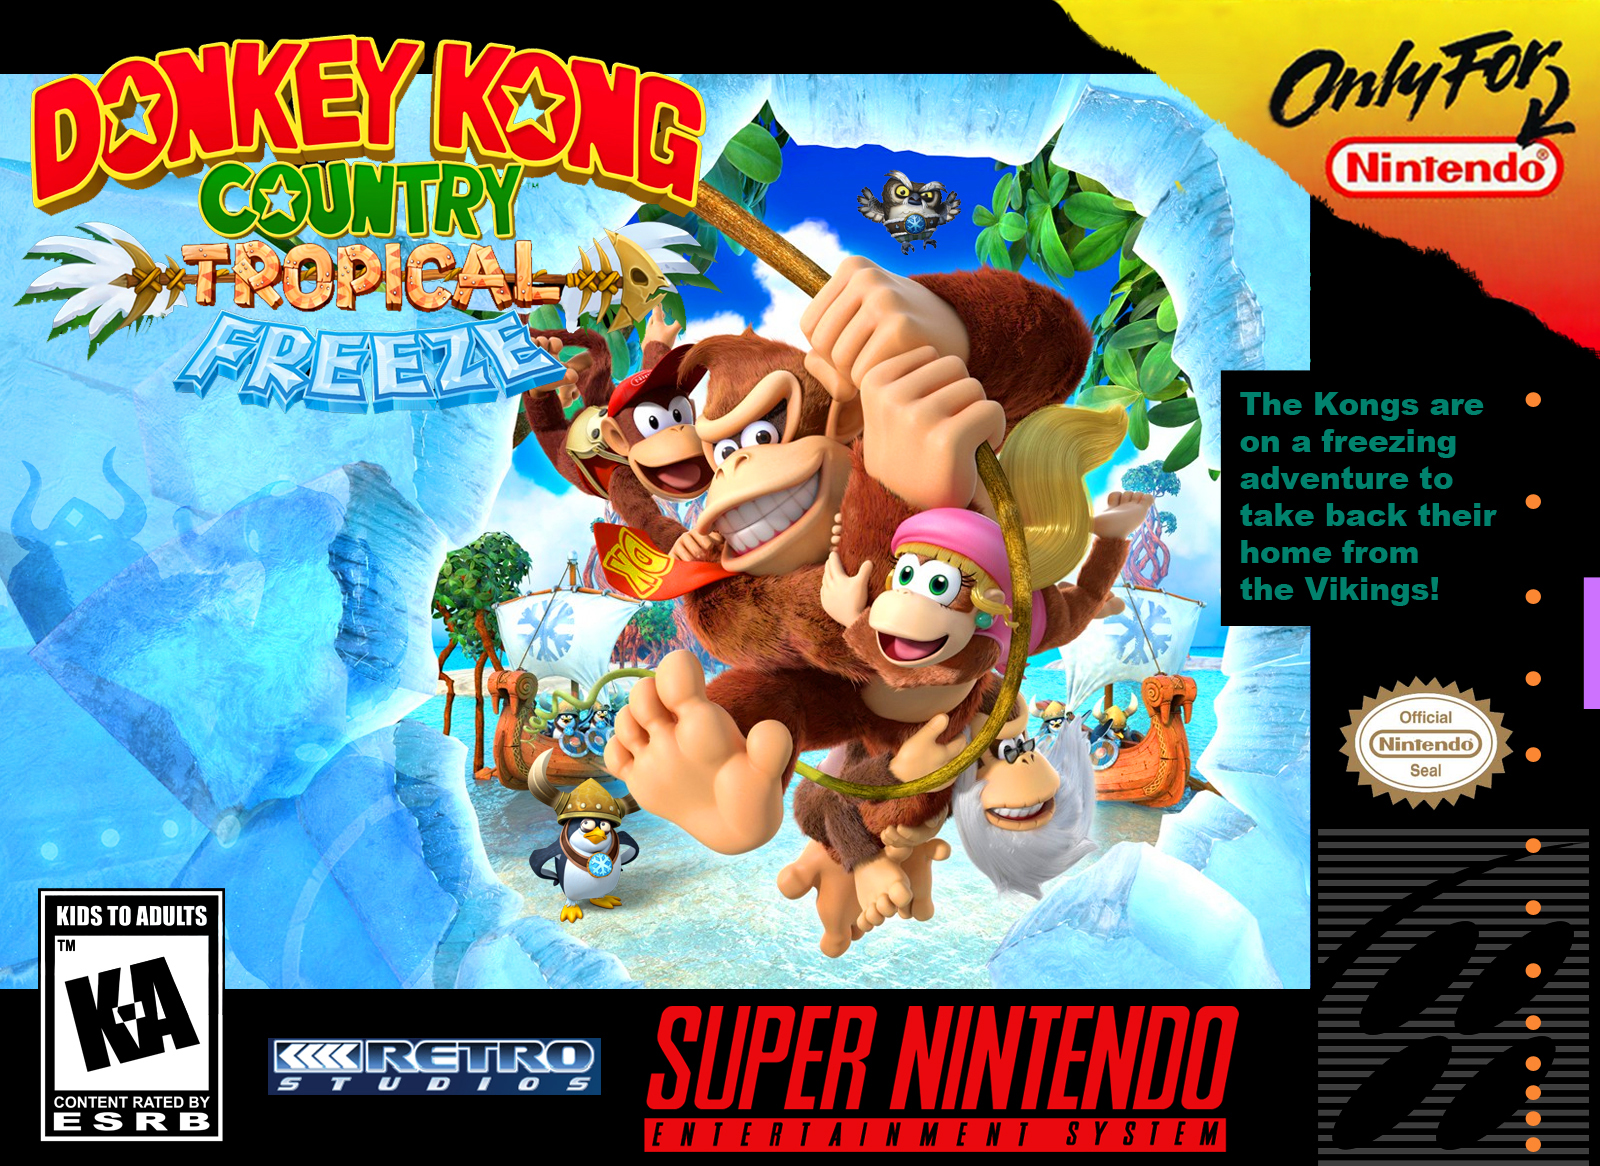 Donkey kong country tropical. Donkey Kong Country Snes обложка. Donkey Kong Country: Tropical Freeze. Donkey Kong Country Snes Cover. Donkey Kong Country Tropical Freeze обложка.